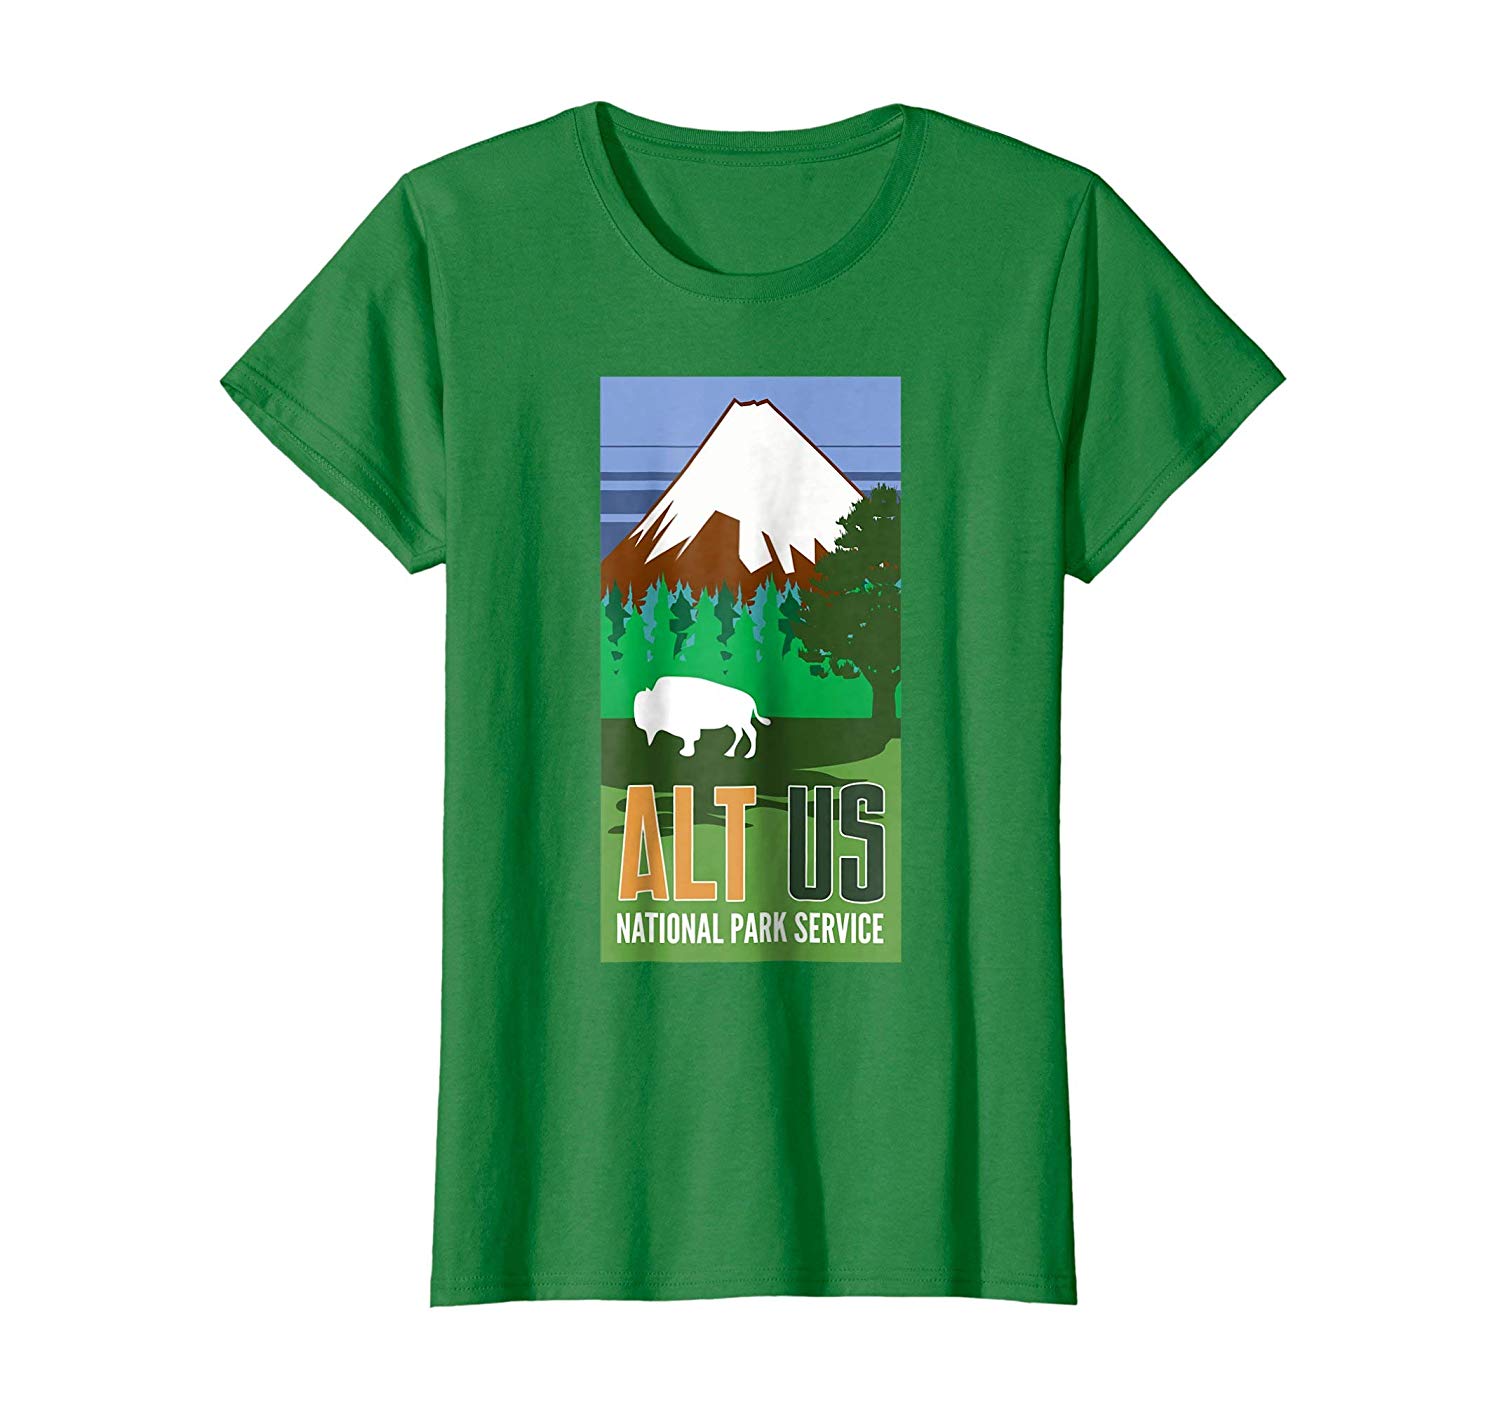 Us National Parks Logo - Amazon.com: ALT US National Park Service Resist Shirt: Clothing